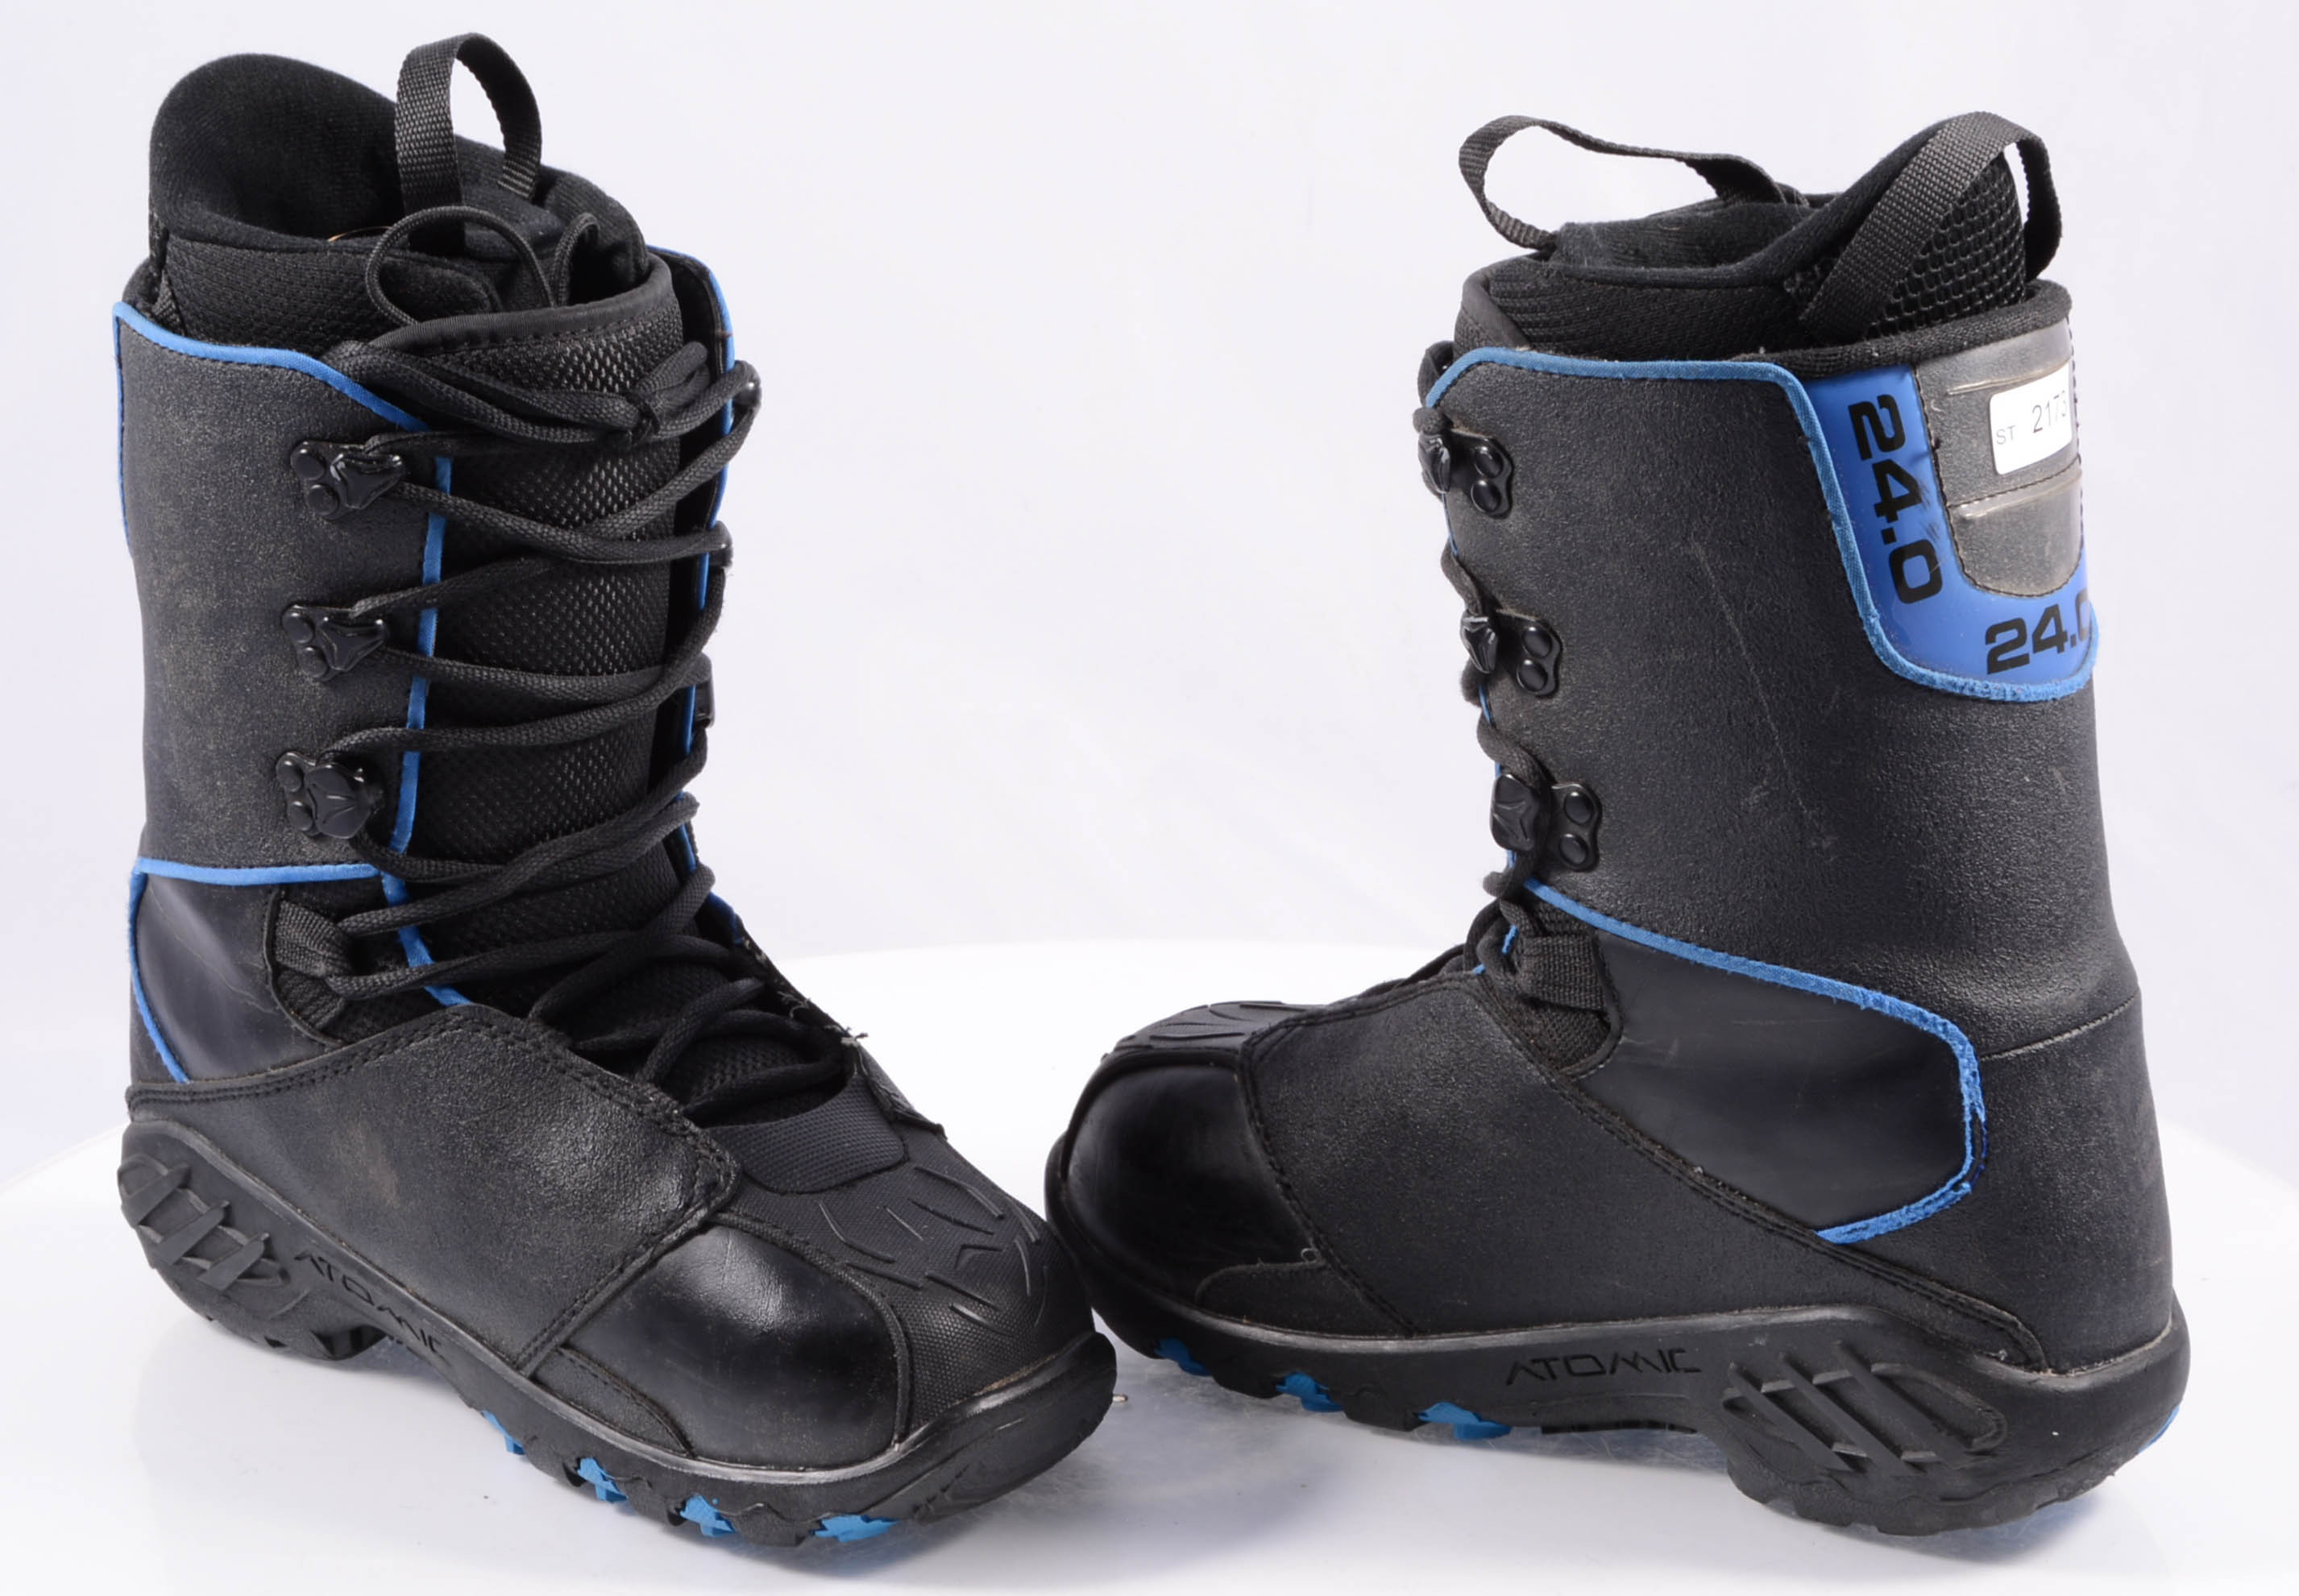 entiteit gras Kamer snowboard boots ATOMIC AIA, black/blue - Mardosport.com